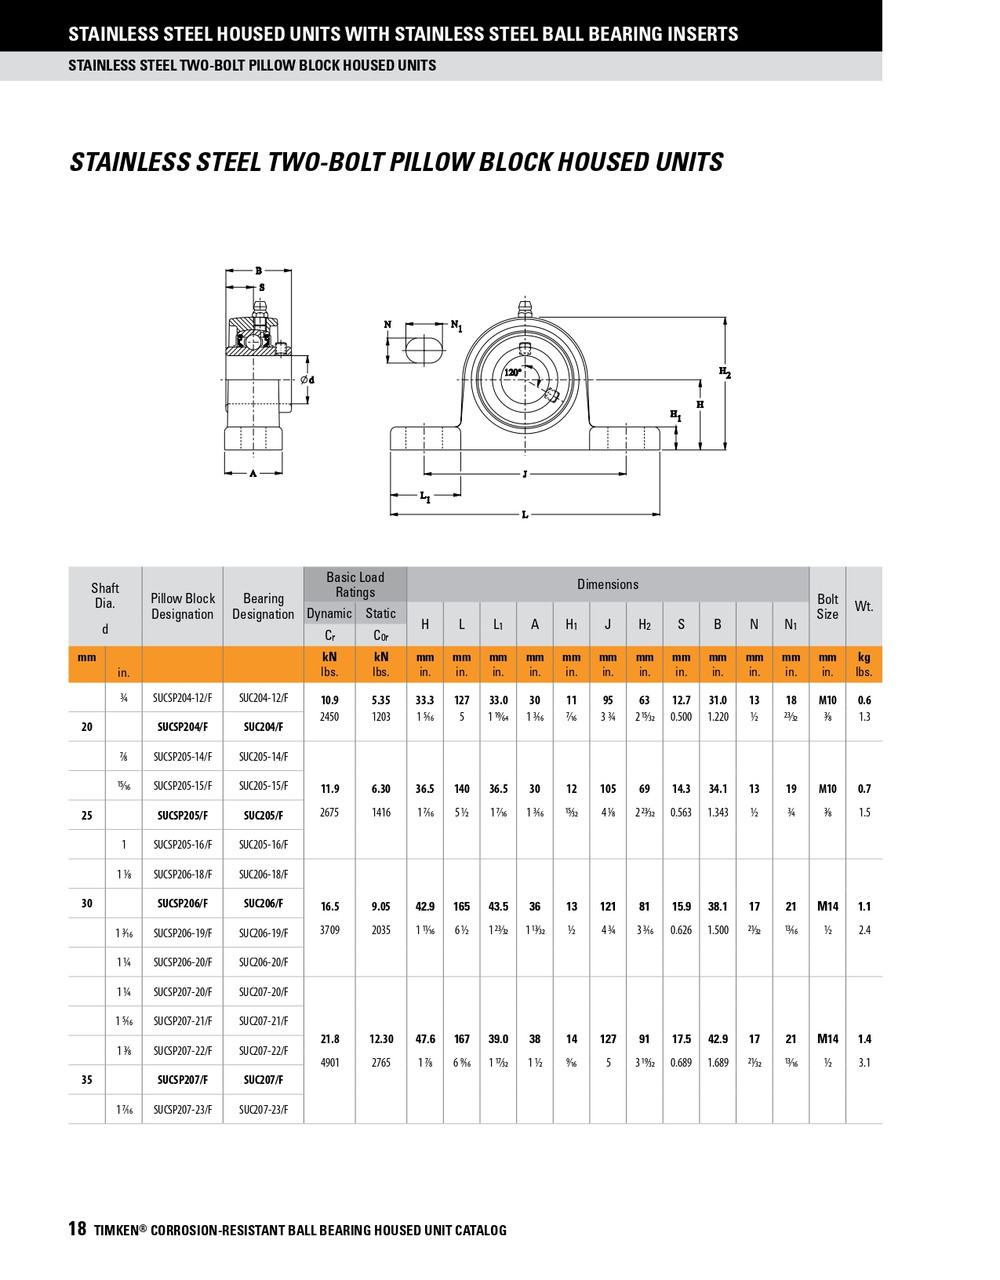 1" Stainless Set Screw Pillow Block Assembly   SUCSP205-16/FVSL613